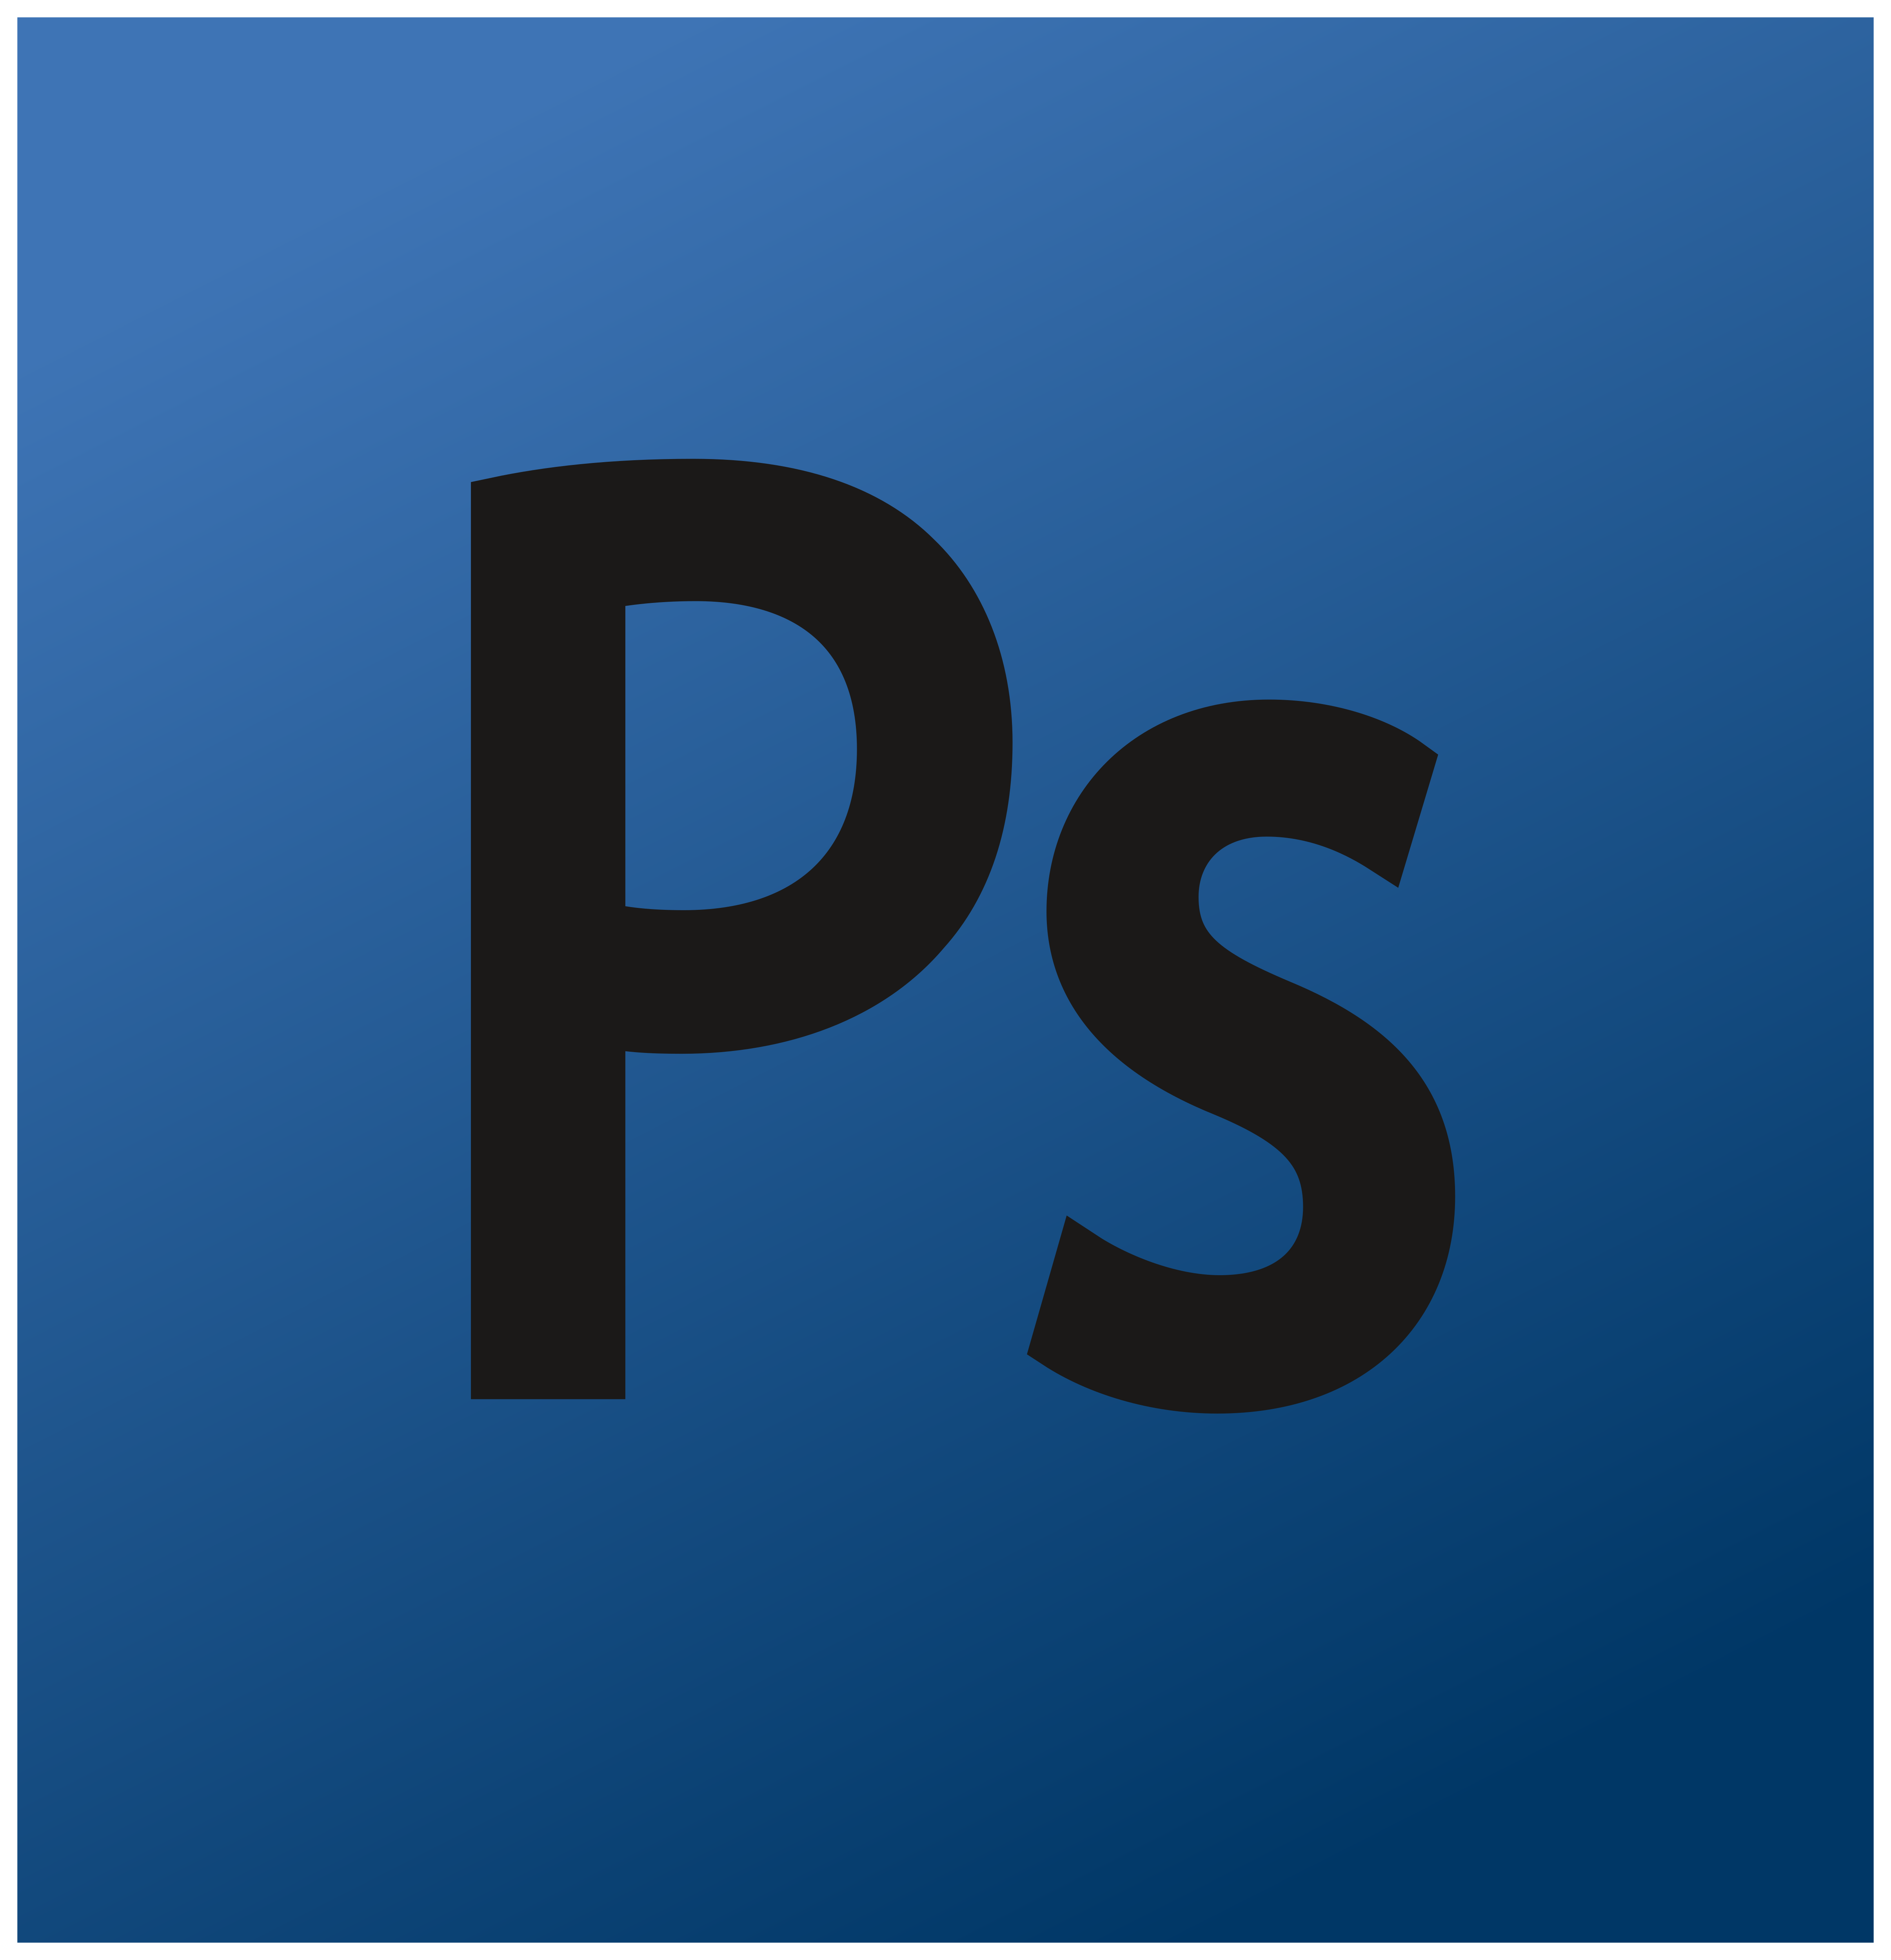 Adobe Photoshop CS4 – Logos Download